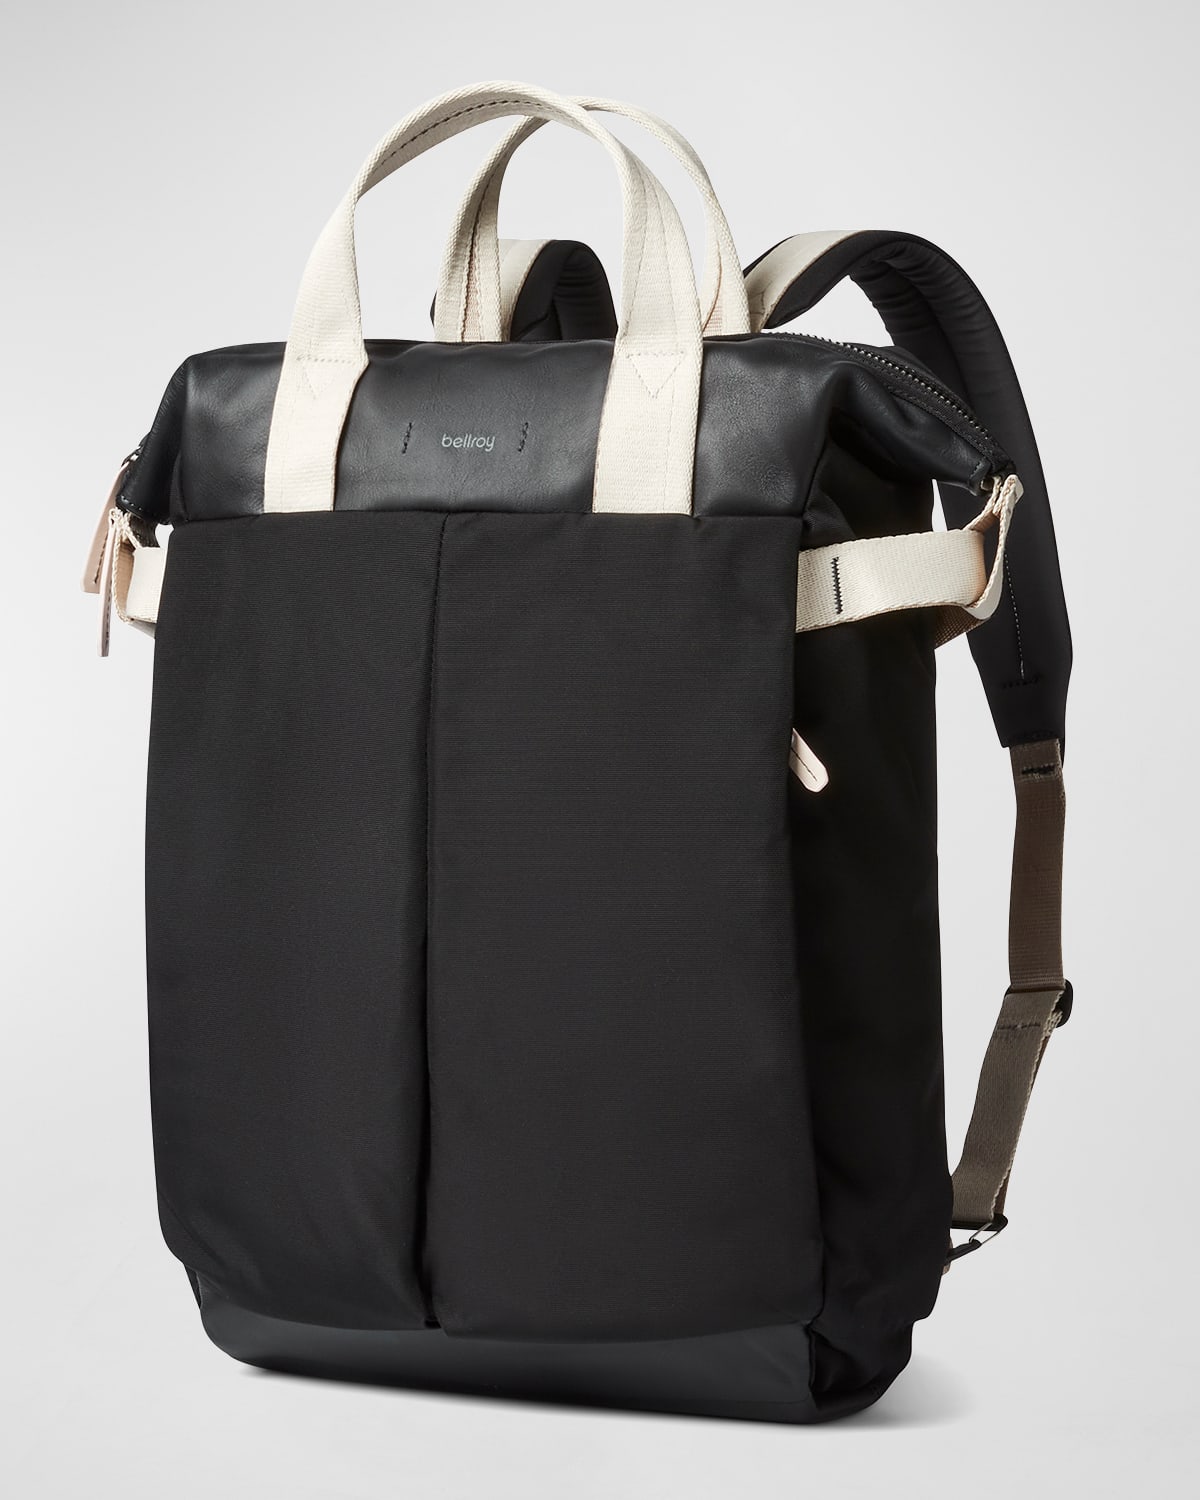 Men's Mini Sling Premium Leather & Nylon Belt Bag